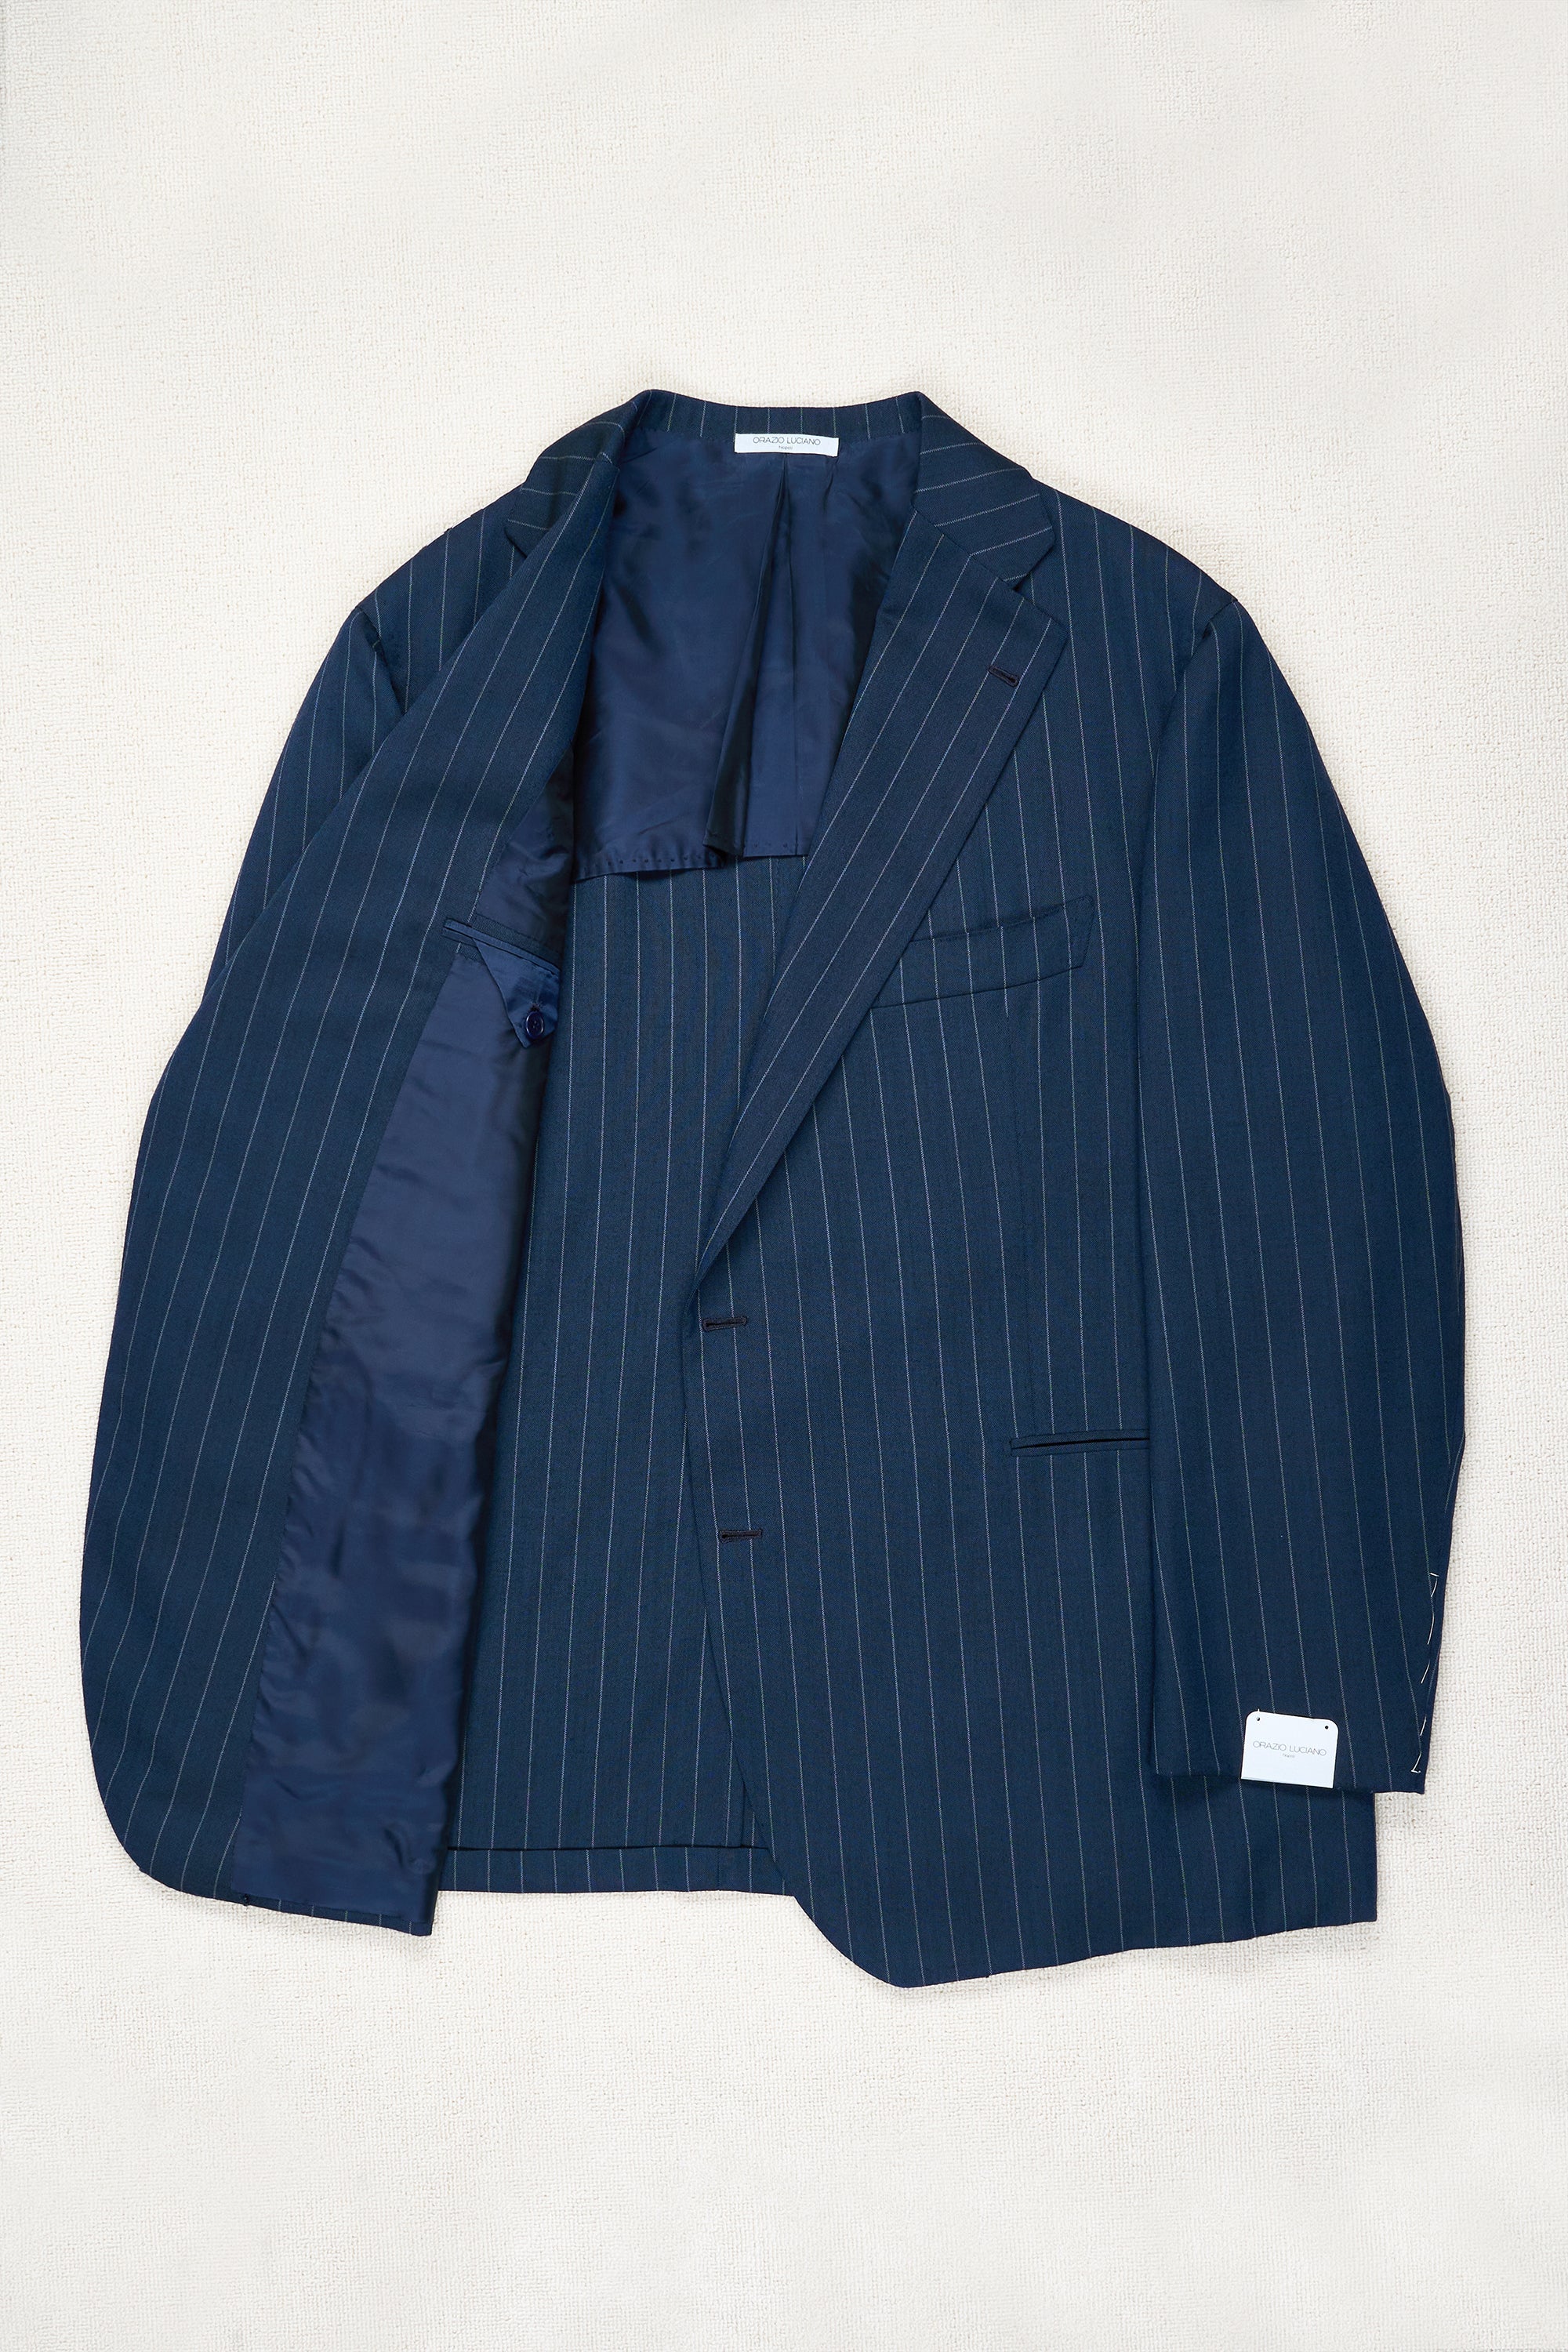 Orazio Luciano Blue with White Chalkstripe Wool Suit Bespoke